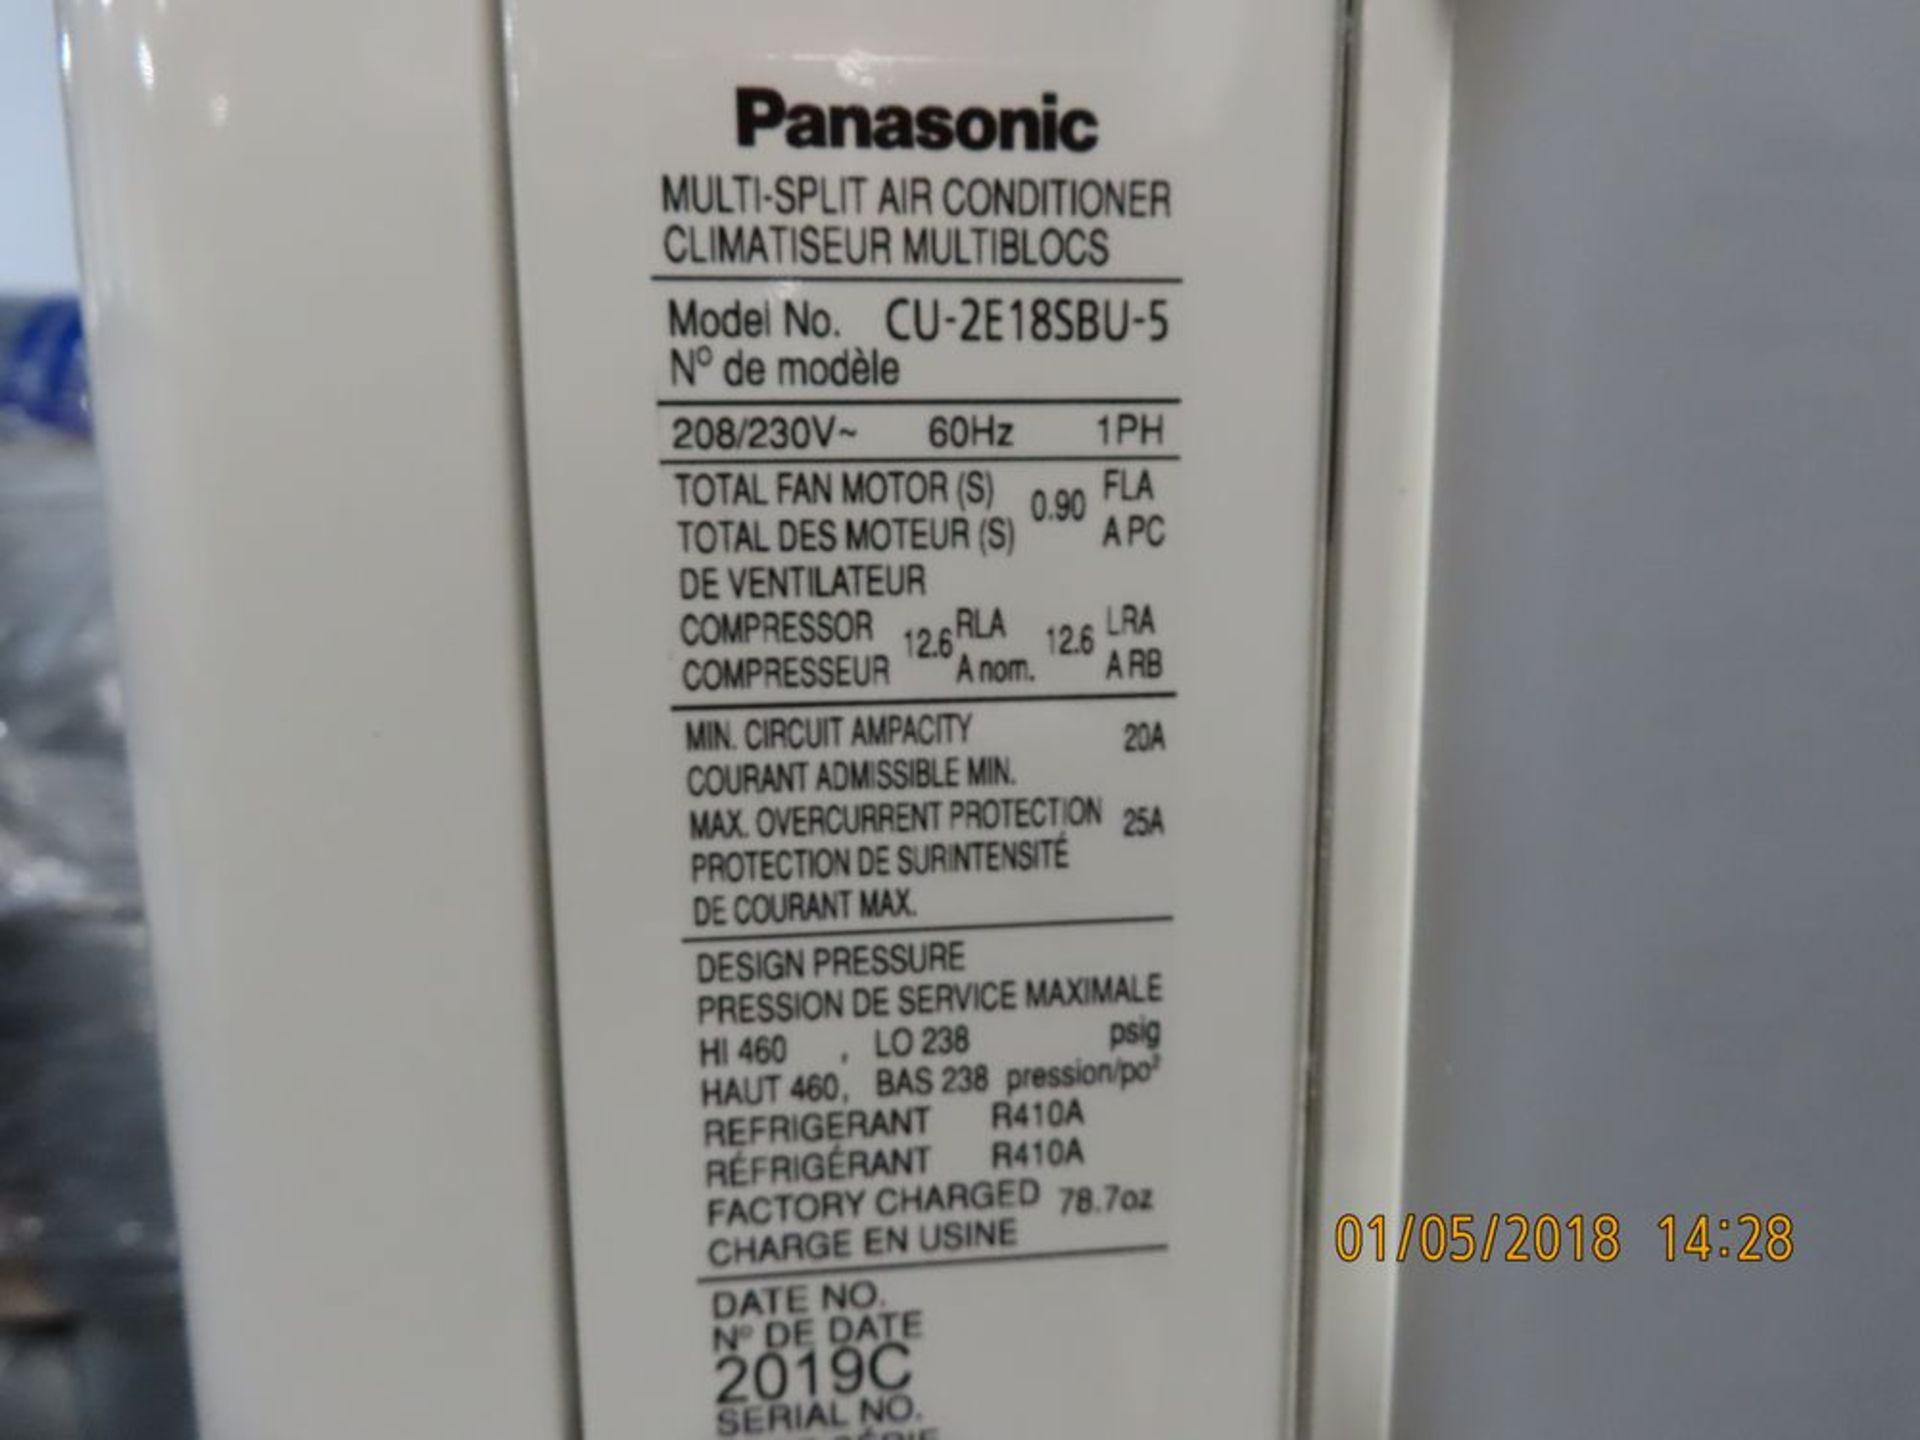 Panasonic mod. CU-2E18SBU-5 Multi Split Air Conditioner Systems - Image 3 of 4